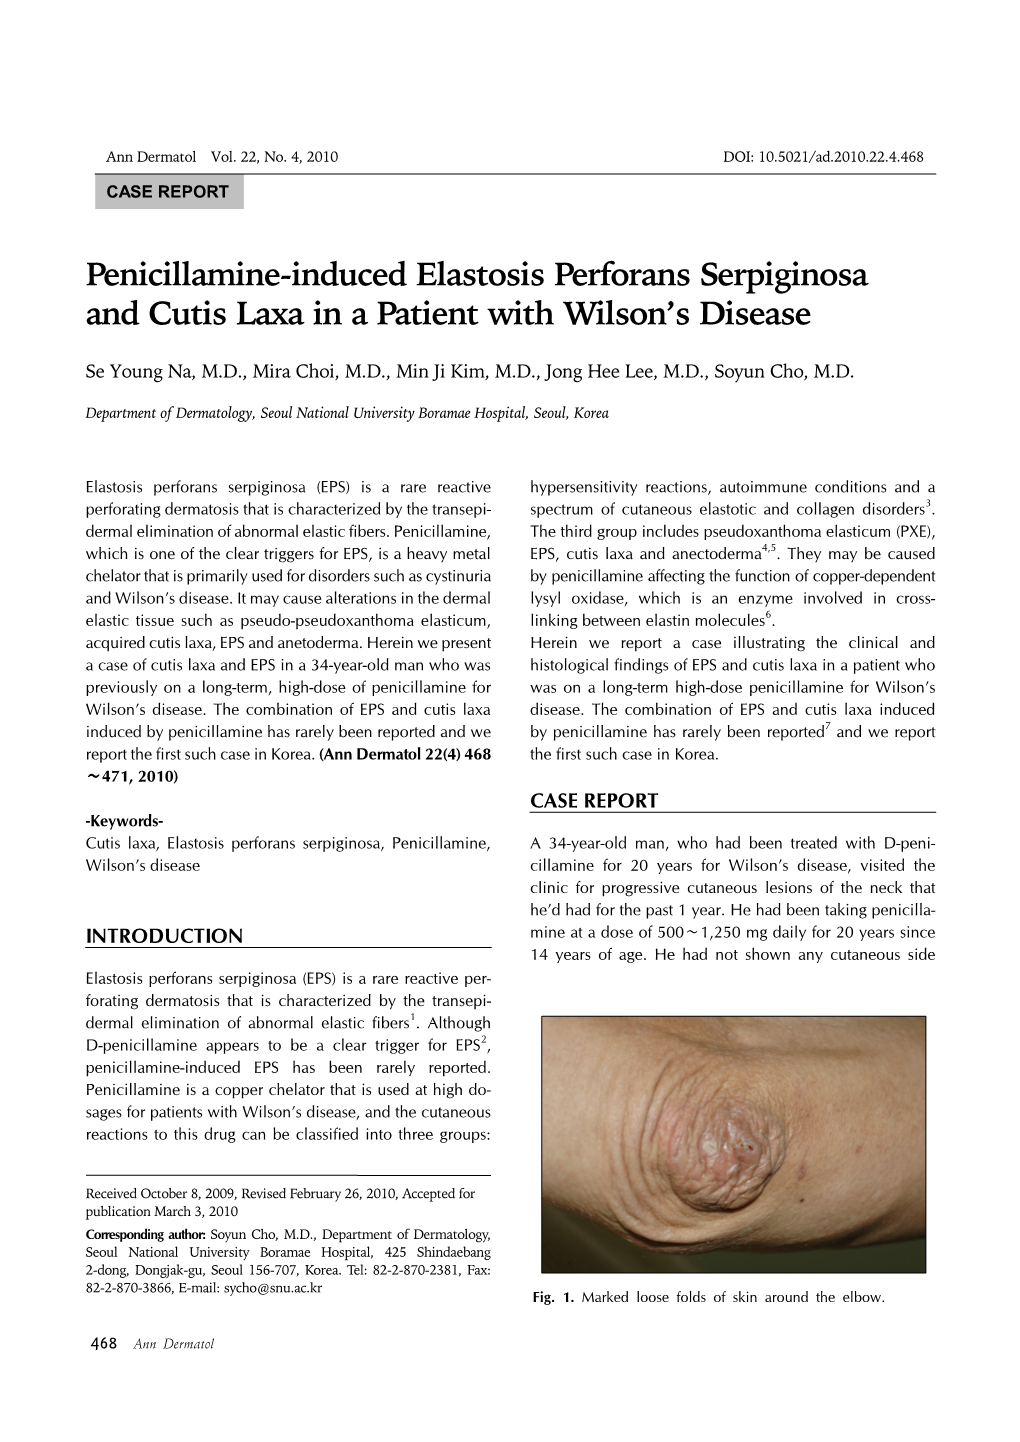 Penicillamine-Induced Elastosis Perforans Serpiginosa and Cutis Laxa in a Patient with Wilson’S Disease